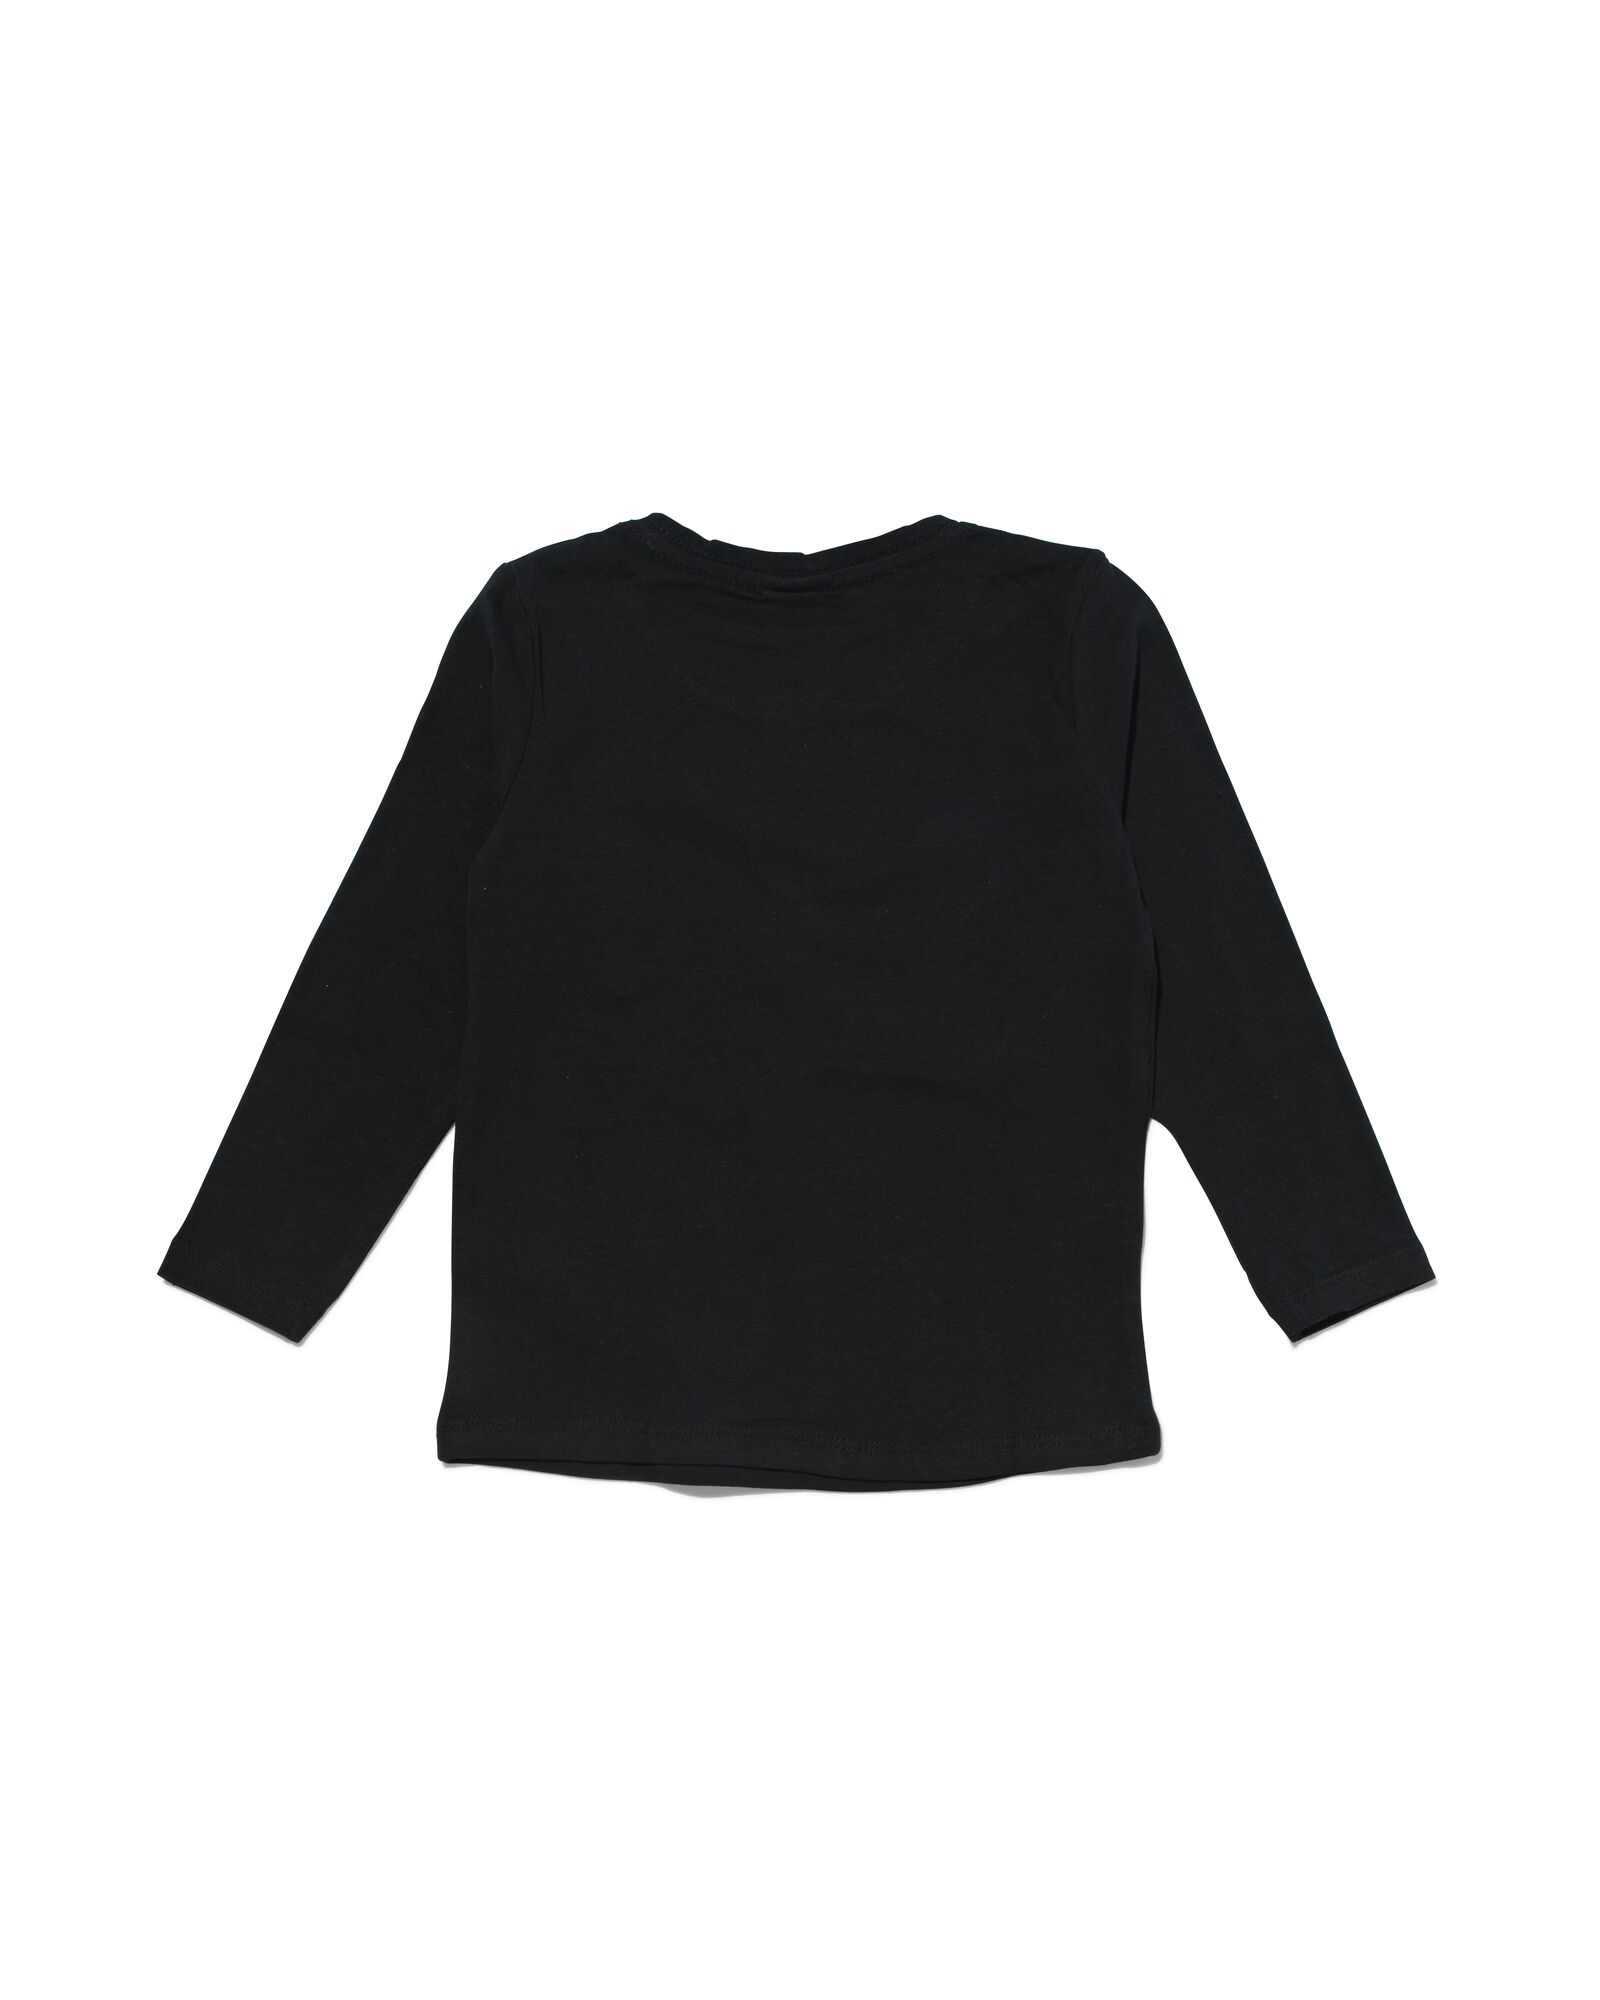 t-shirt enfant noir 146/152 - 30843647 - HEMA